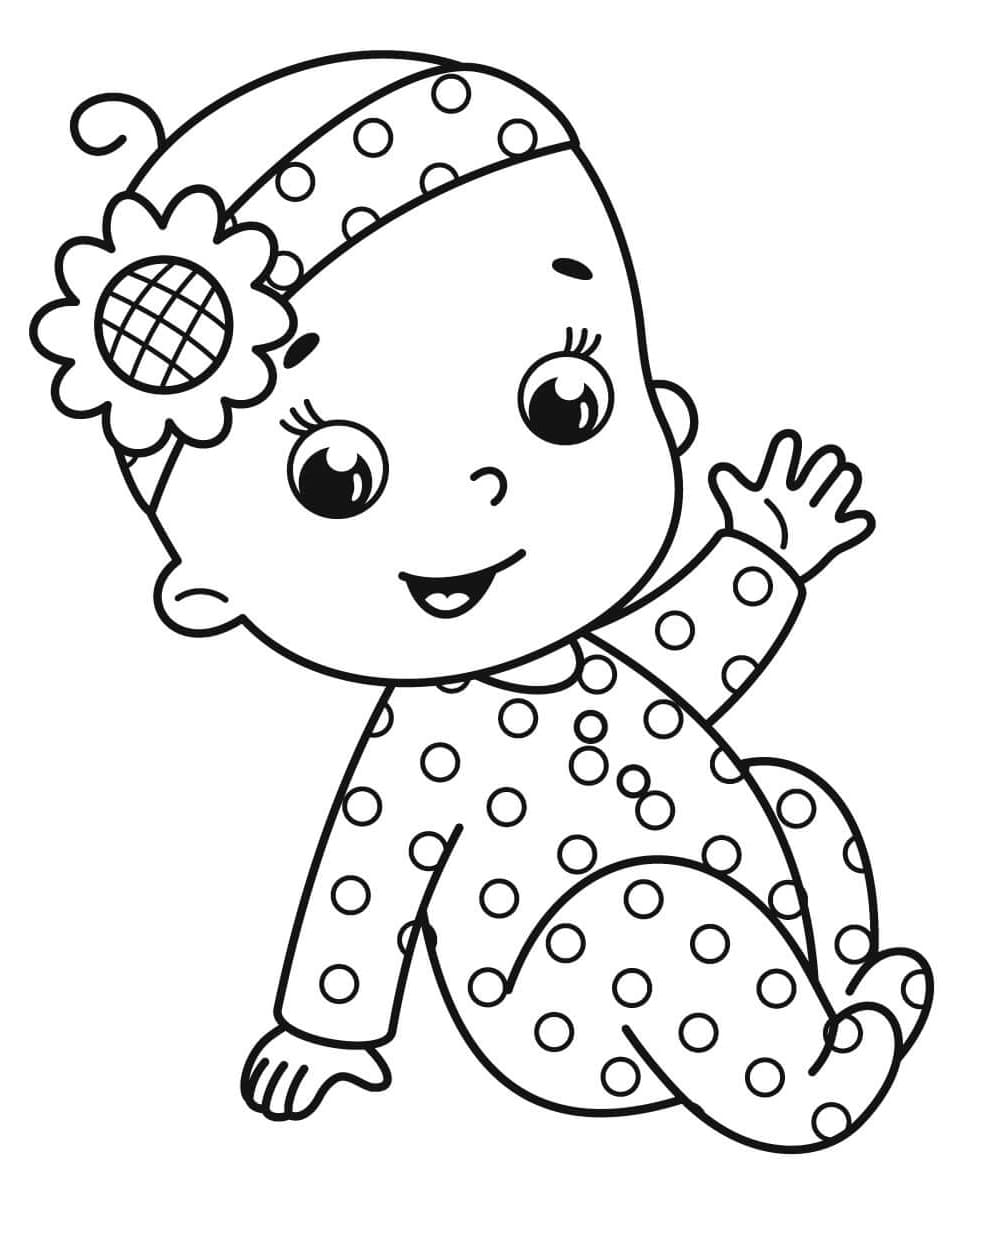 Baby Girl Waving Hand Coloring Page   Free Printable Coloring ...